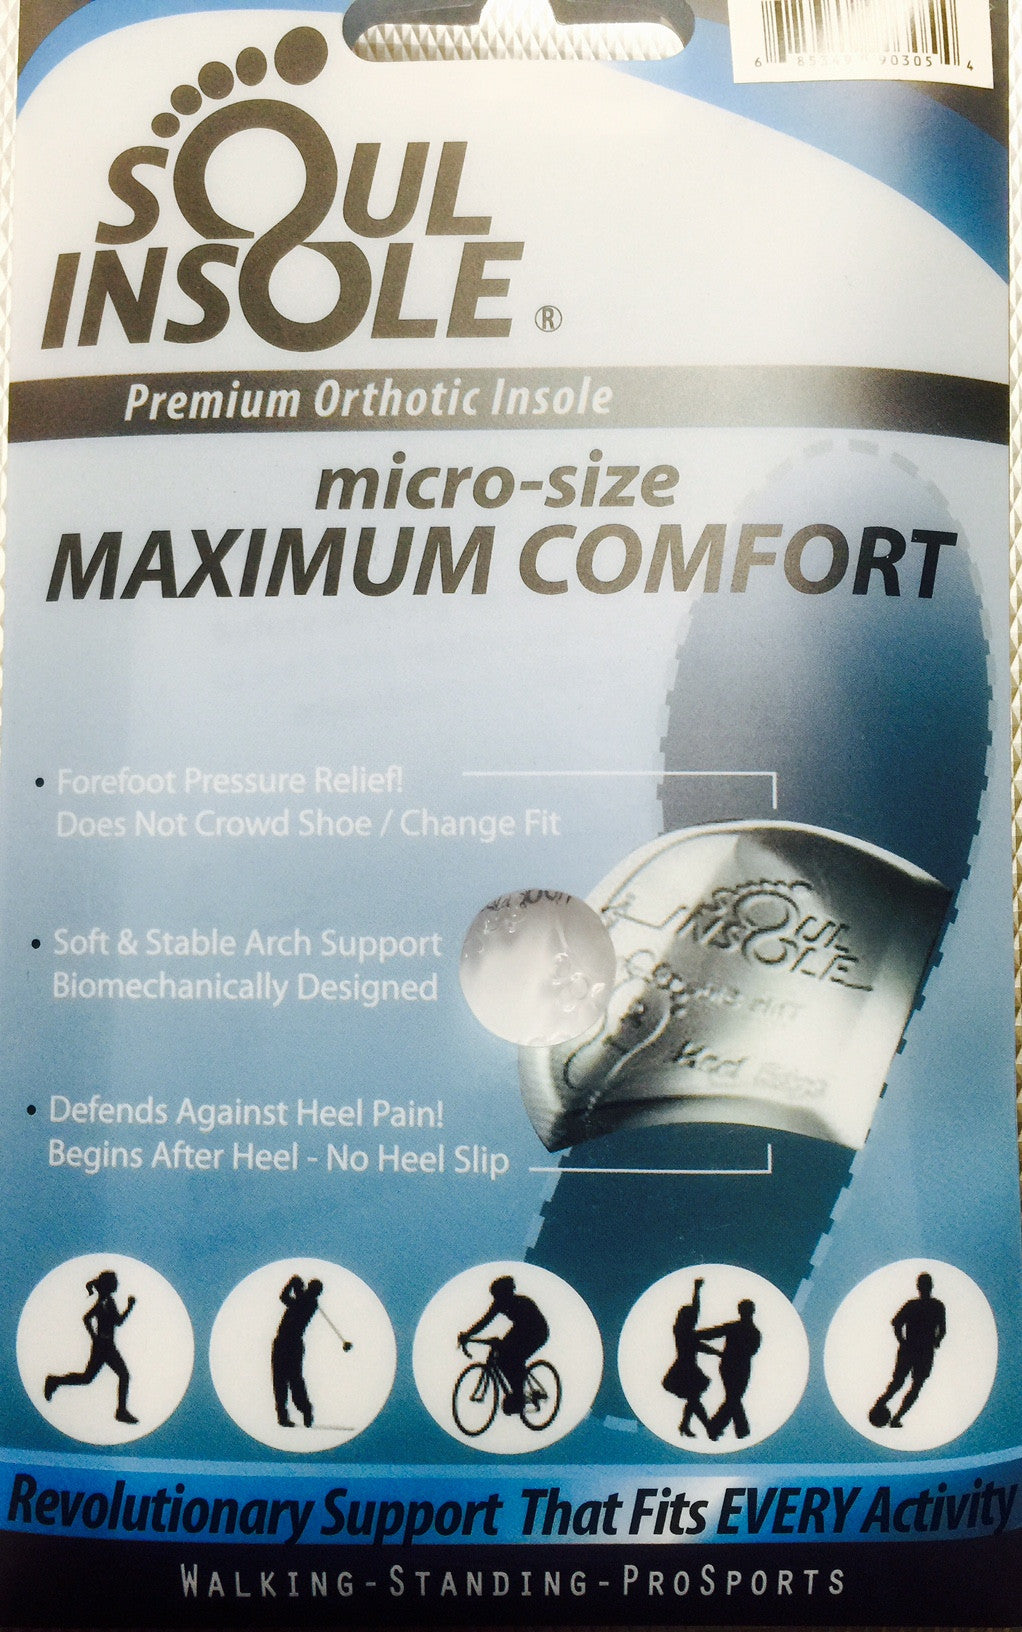 Soul Insole Premium Orthotic Insole Micro-Size Maximum Comfort